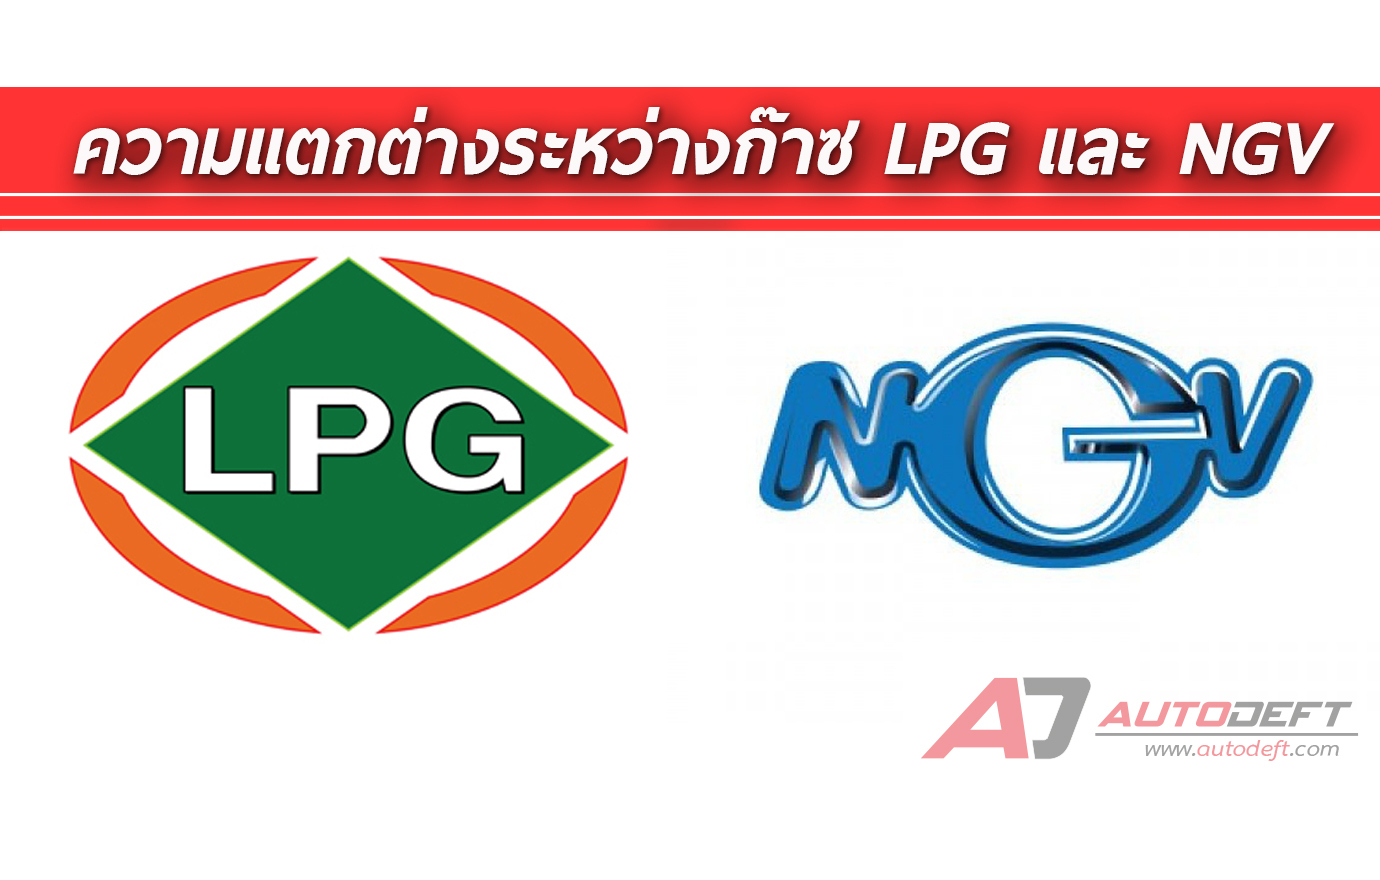 NGV LPG